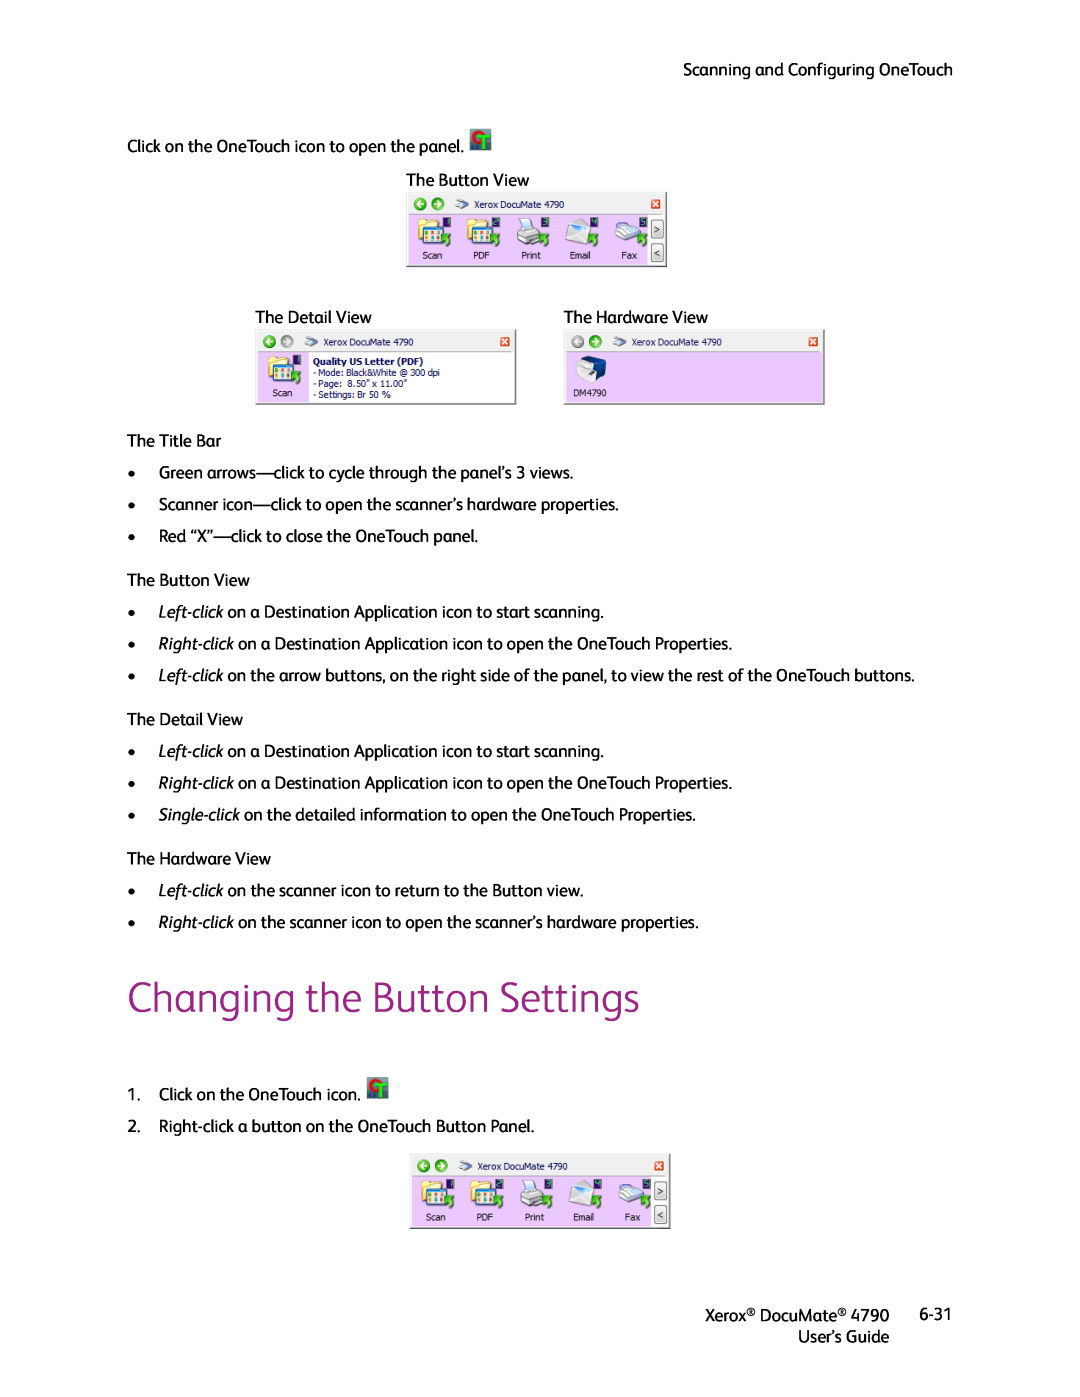 Xerox xerox documate manual Changing the Button Settings, The Hardware View 